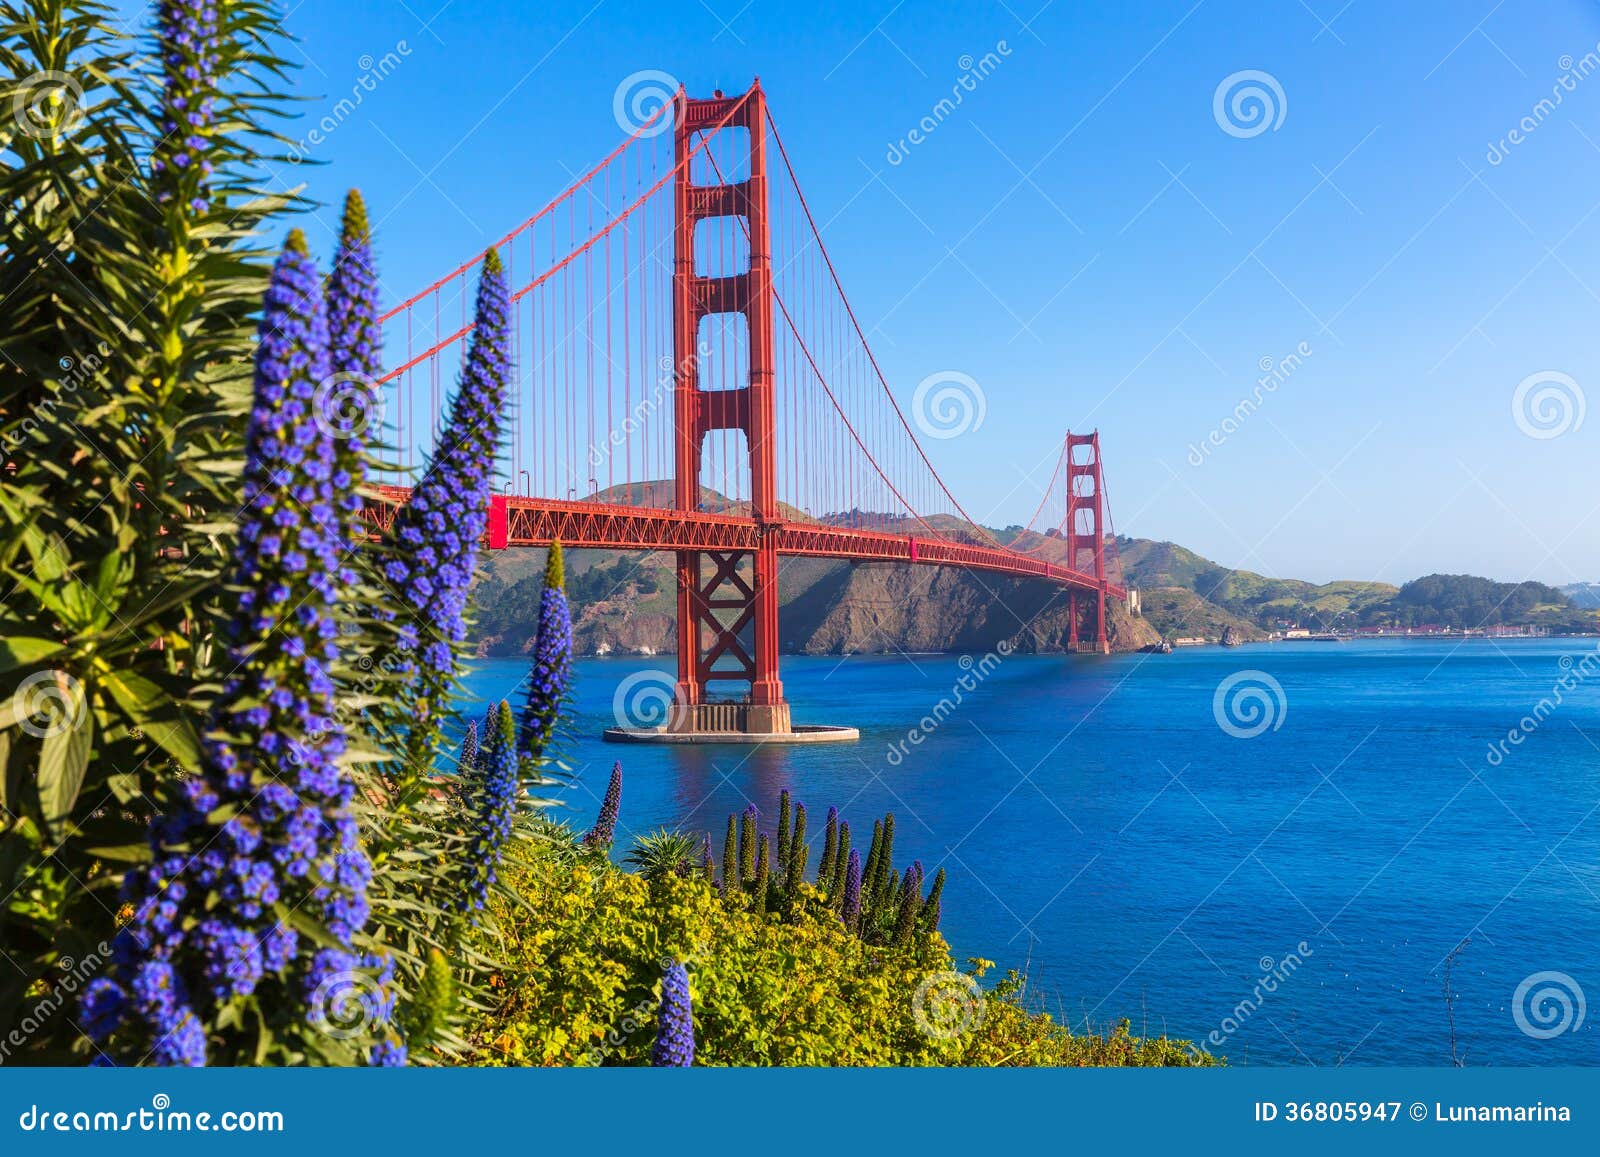 golden gate bridge san francisco purple flowers california